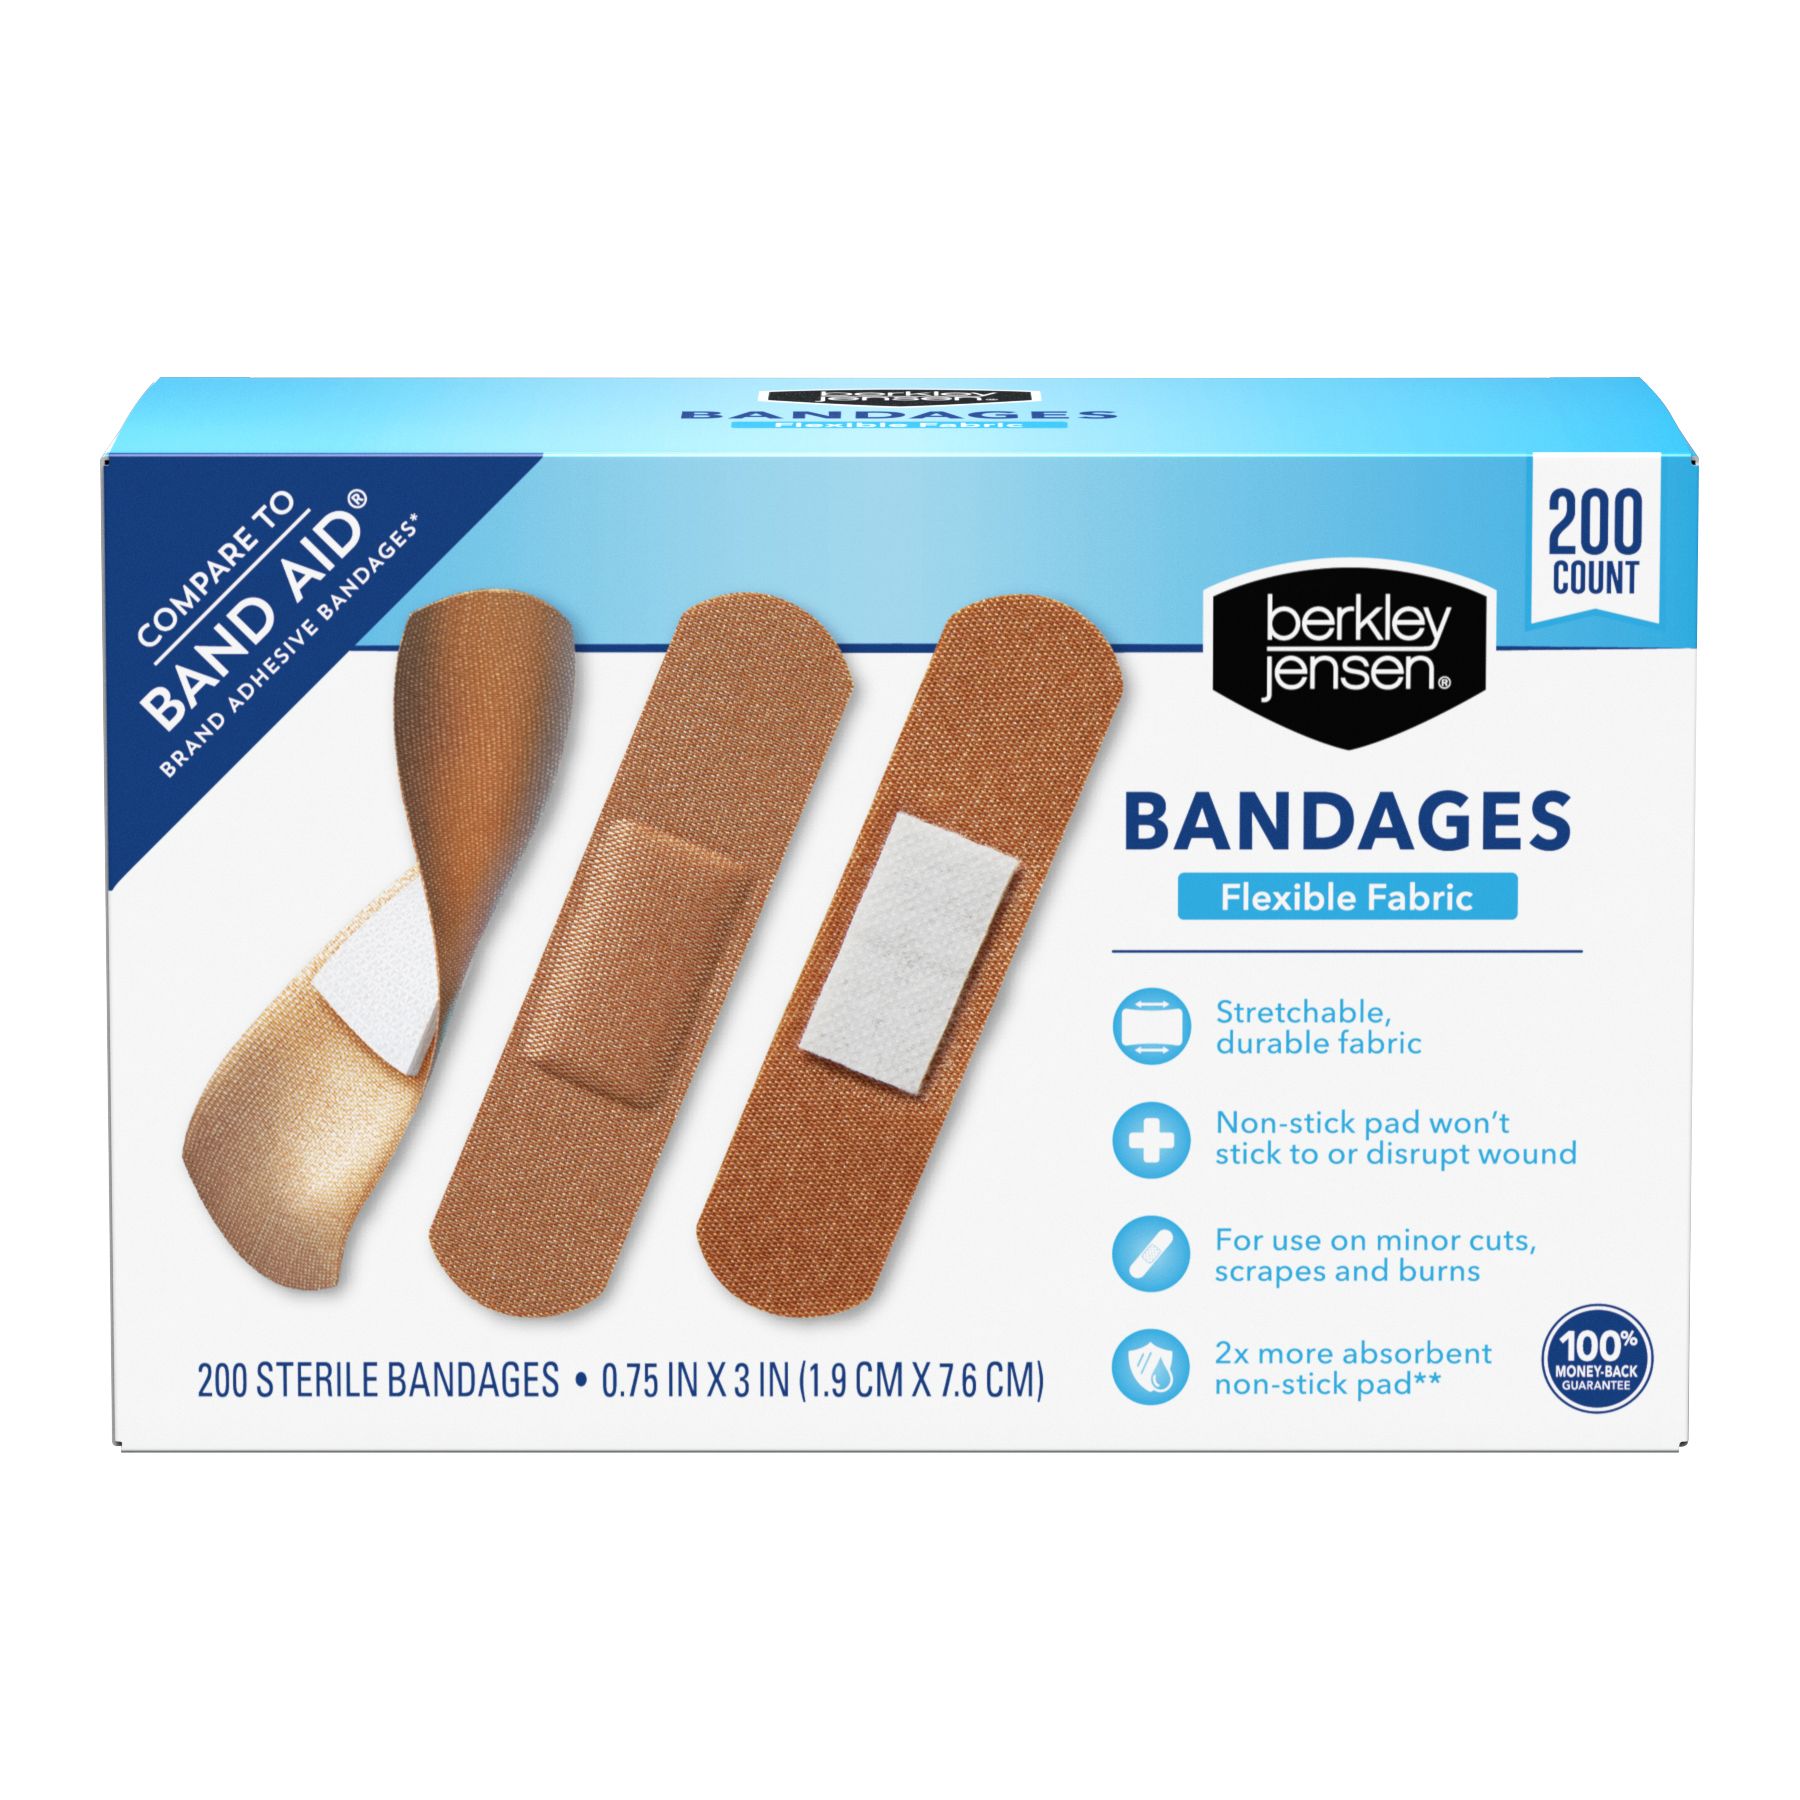 Buy Band-Aid Brand Adhesive Bandages Frozen at